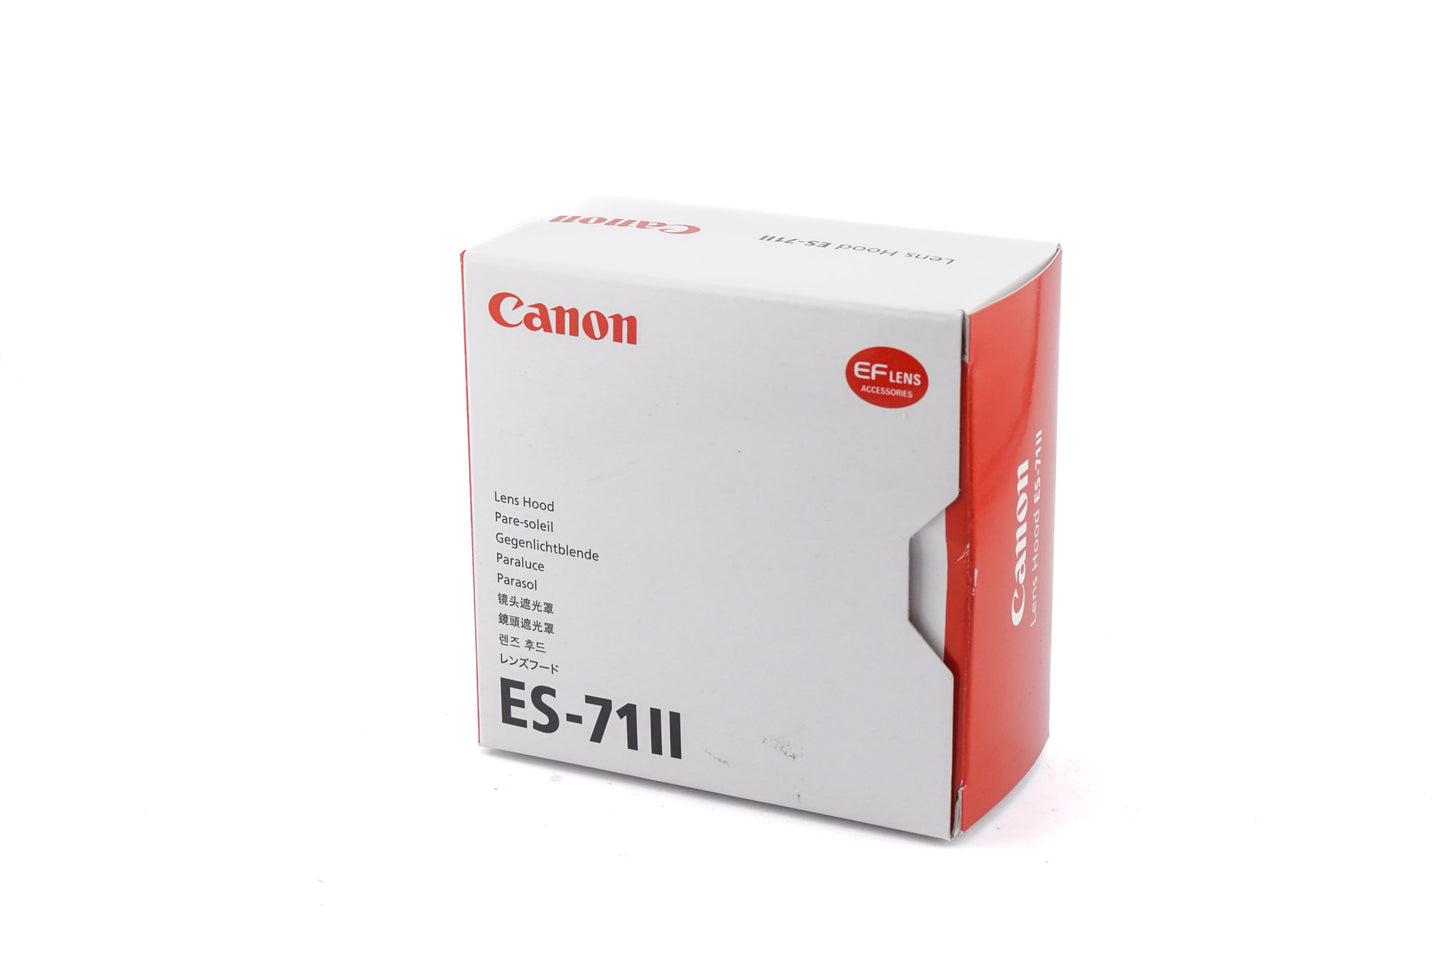 Canon ES-71II Lens Hood